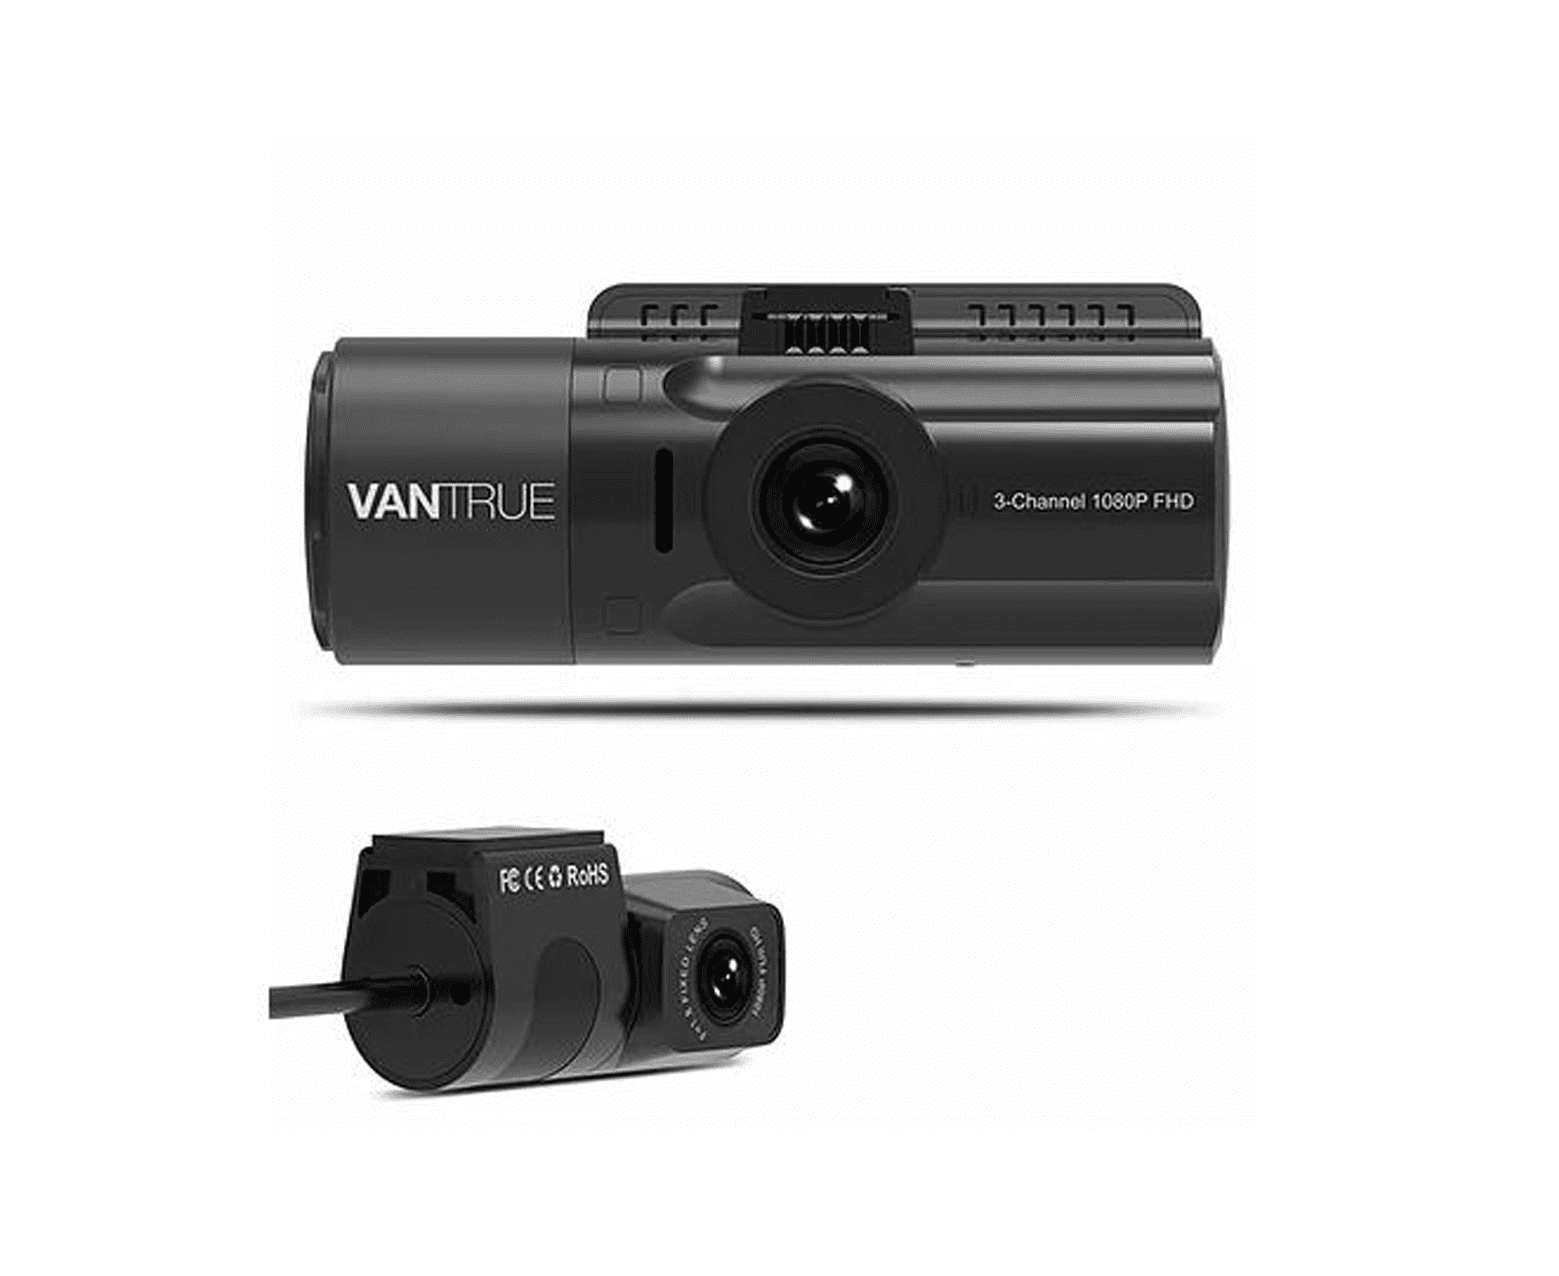 Dashcam Vantrue N4 a 3 canali 1440p | con pacchetto kit hardware